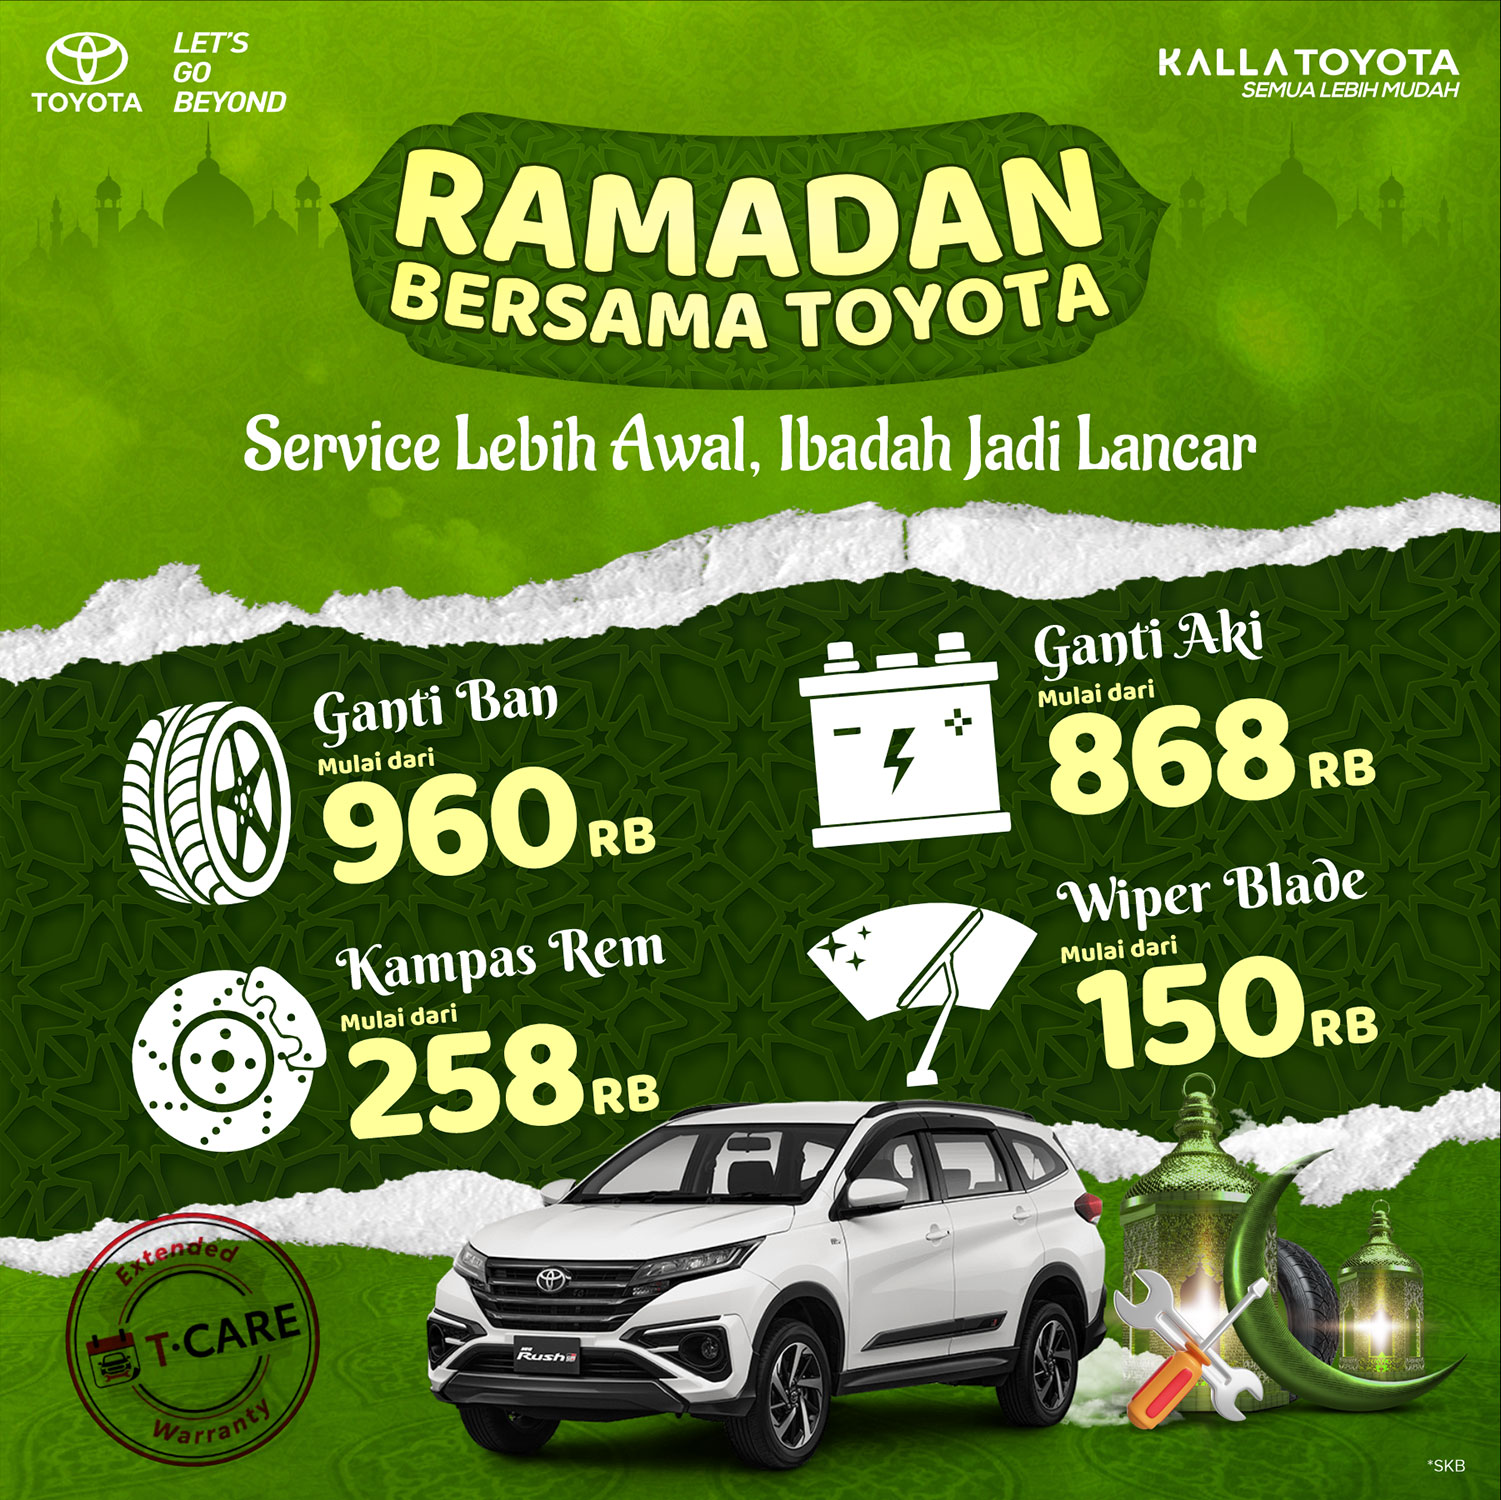 Ramadan bersama Toyota